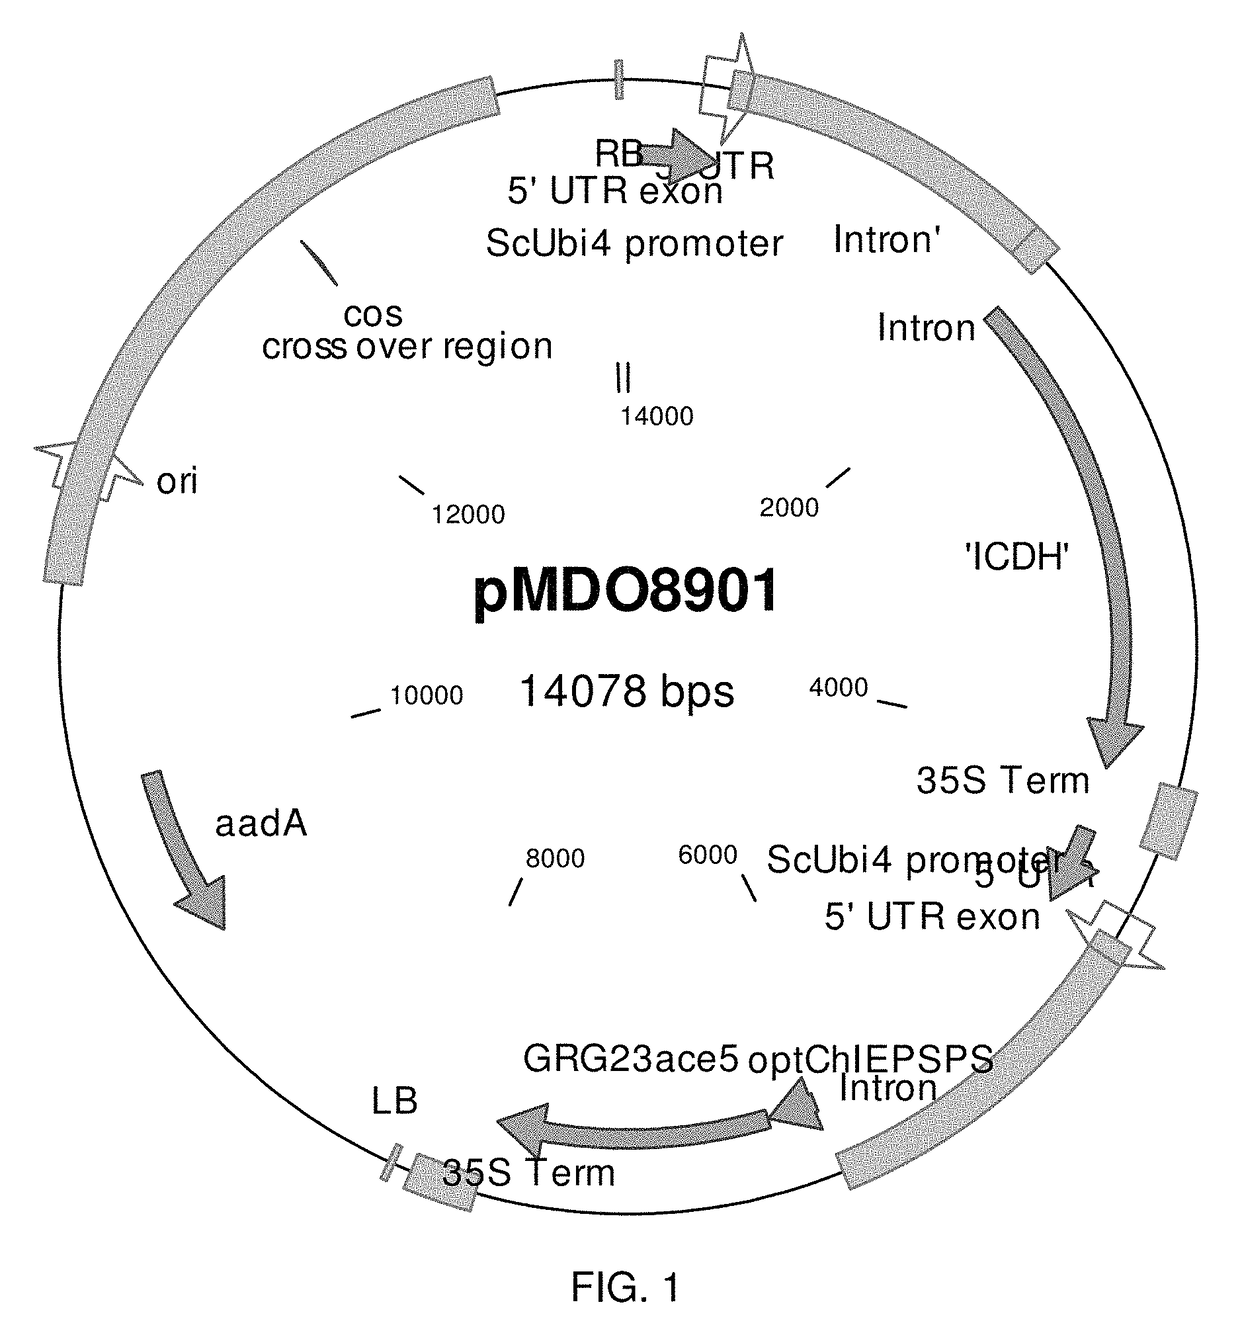 Prokarytoic-type isocitrate dehydrogenase and its application for improving nitrogen utilization in transgenic plants